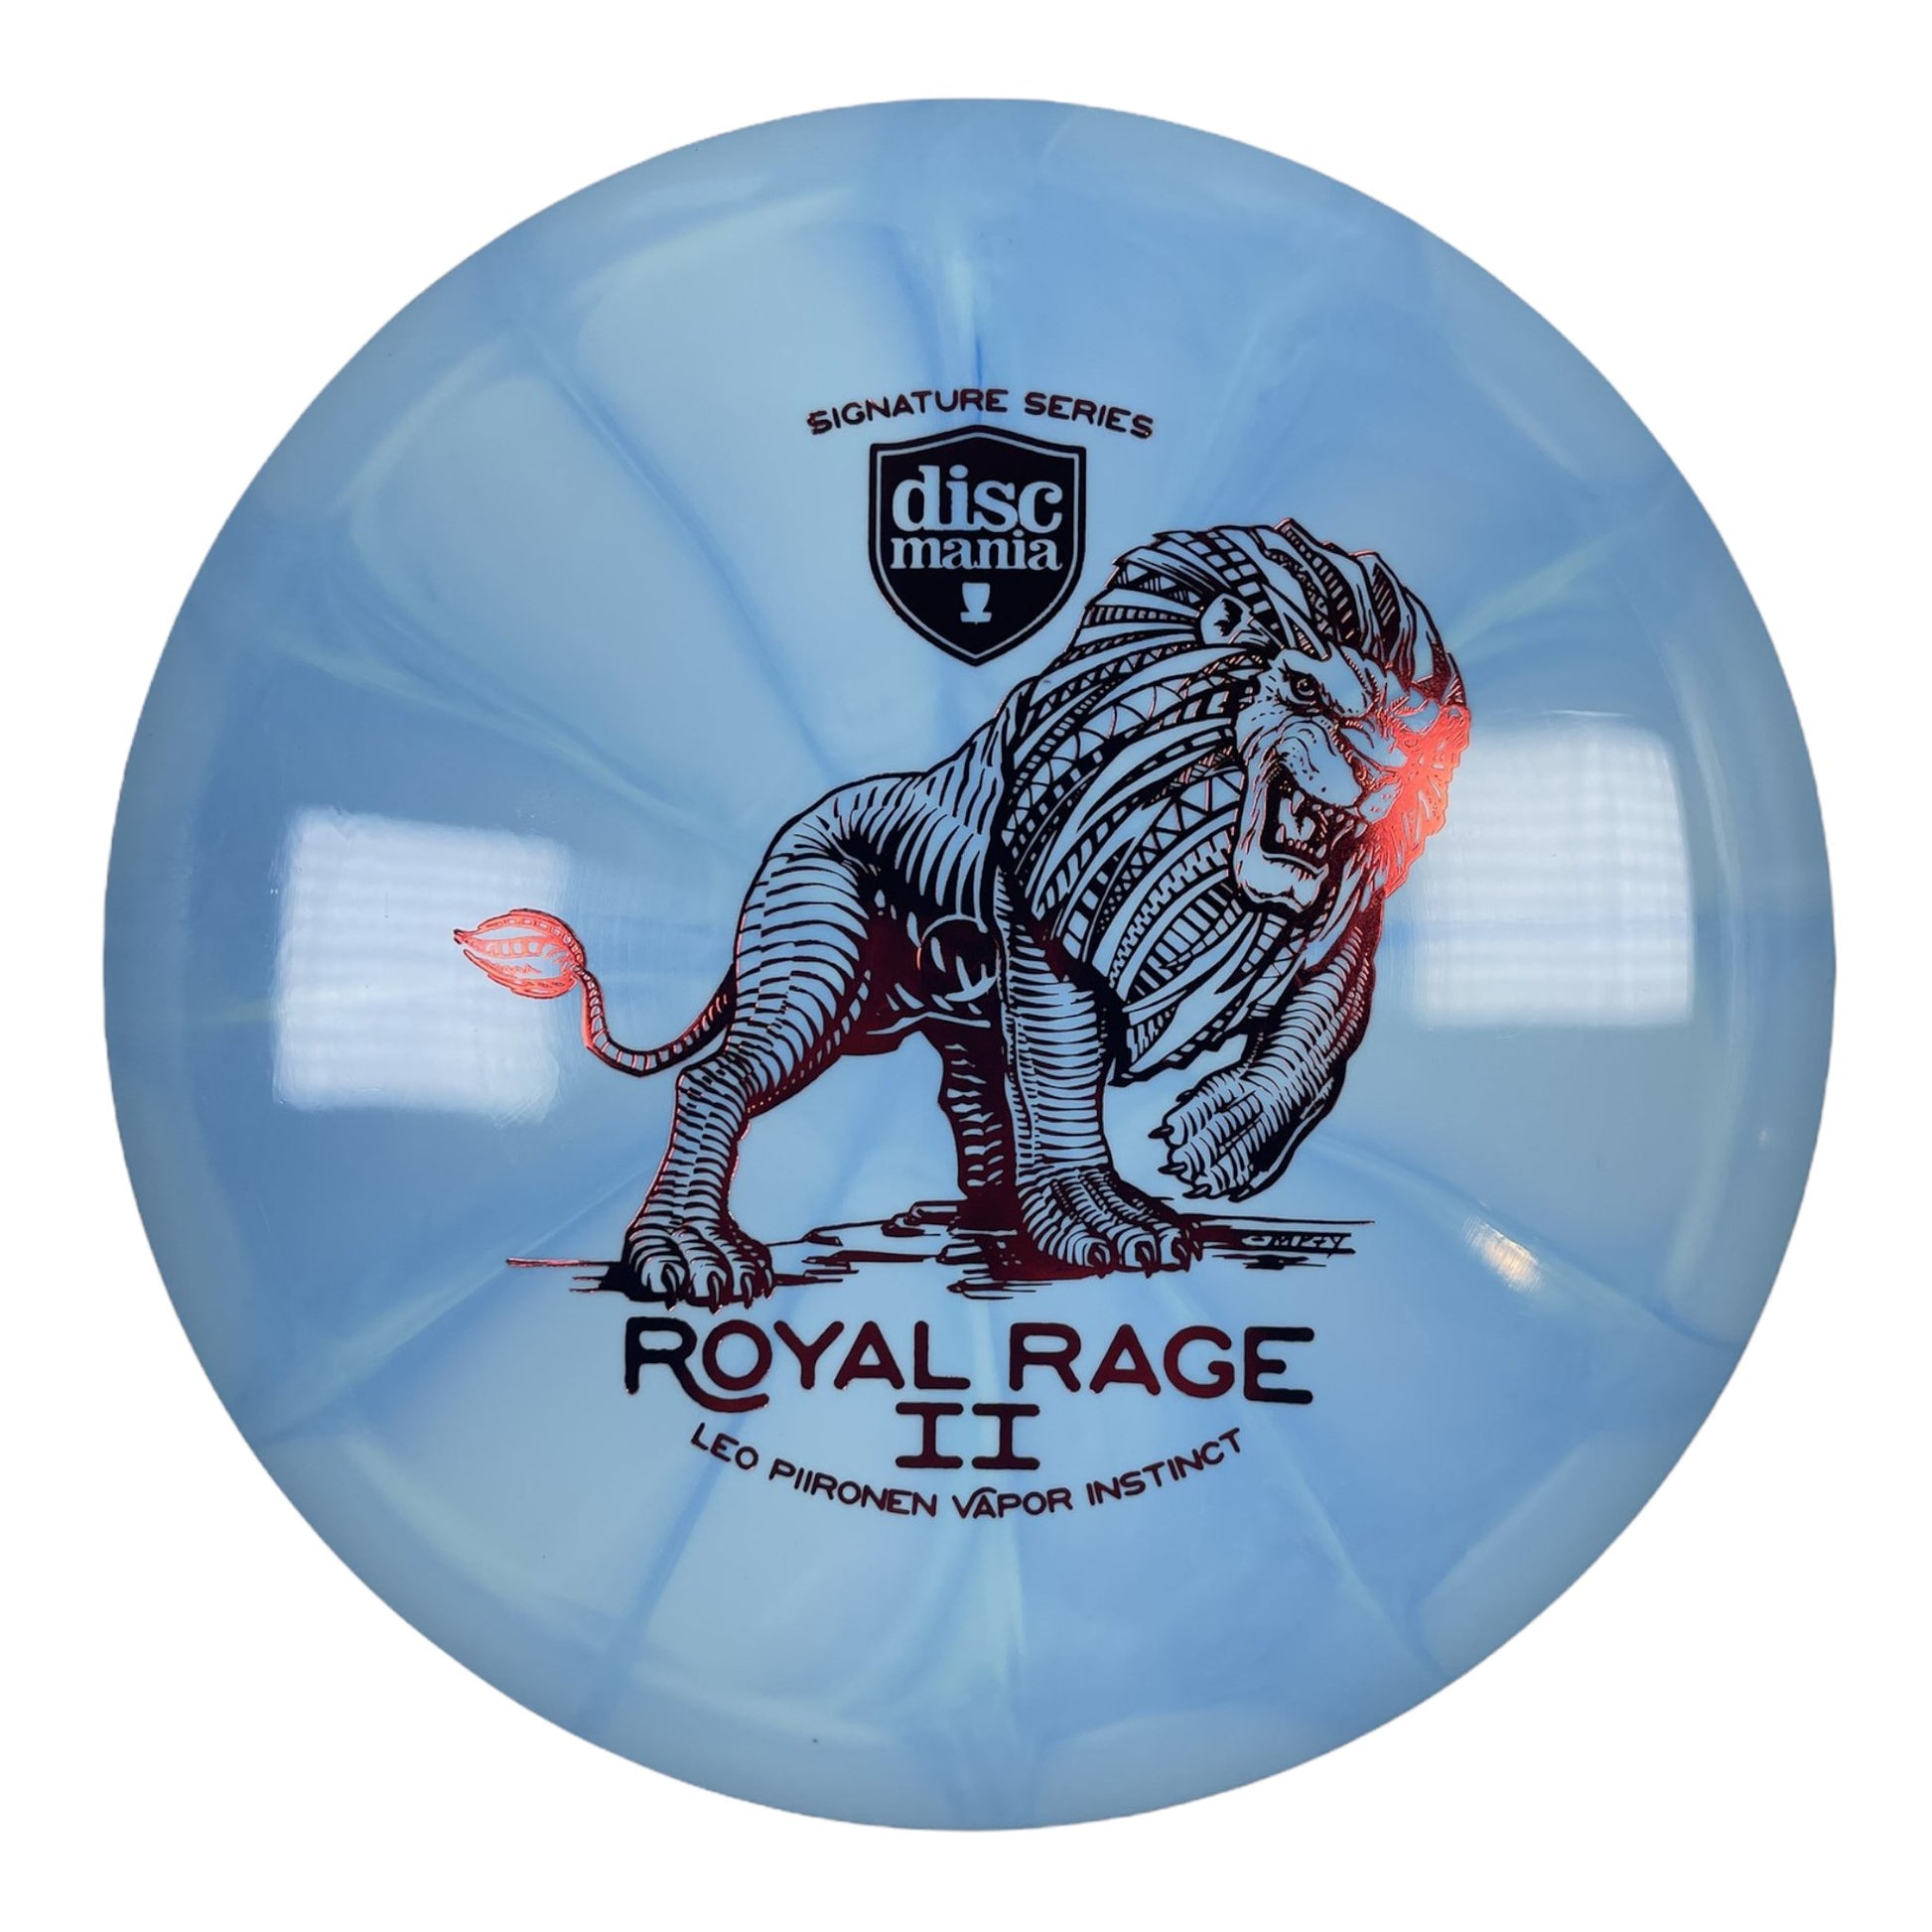 Discmania Royal Rage 2 - Instinct | Lux Vapor | Blue/Red 173-175g (Leo Piironen) Disc Golf